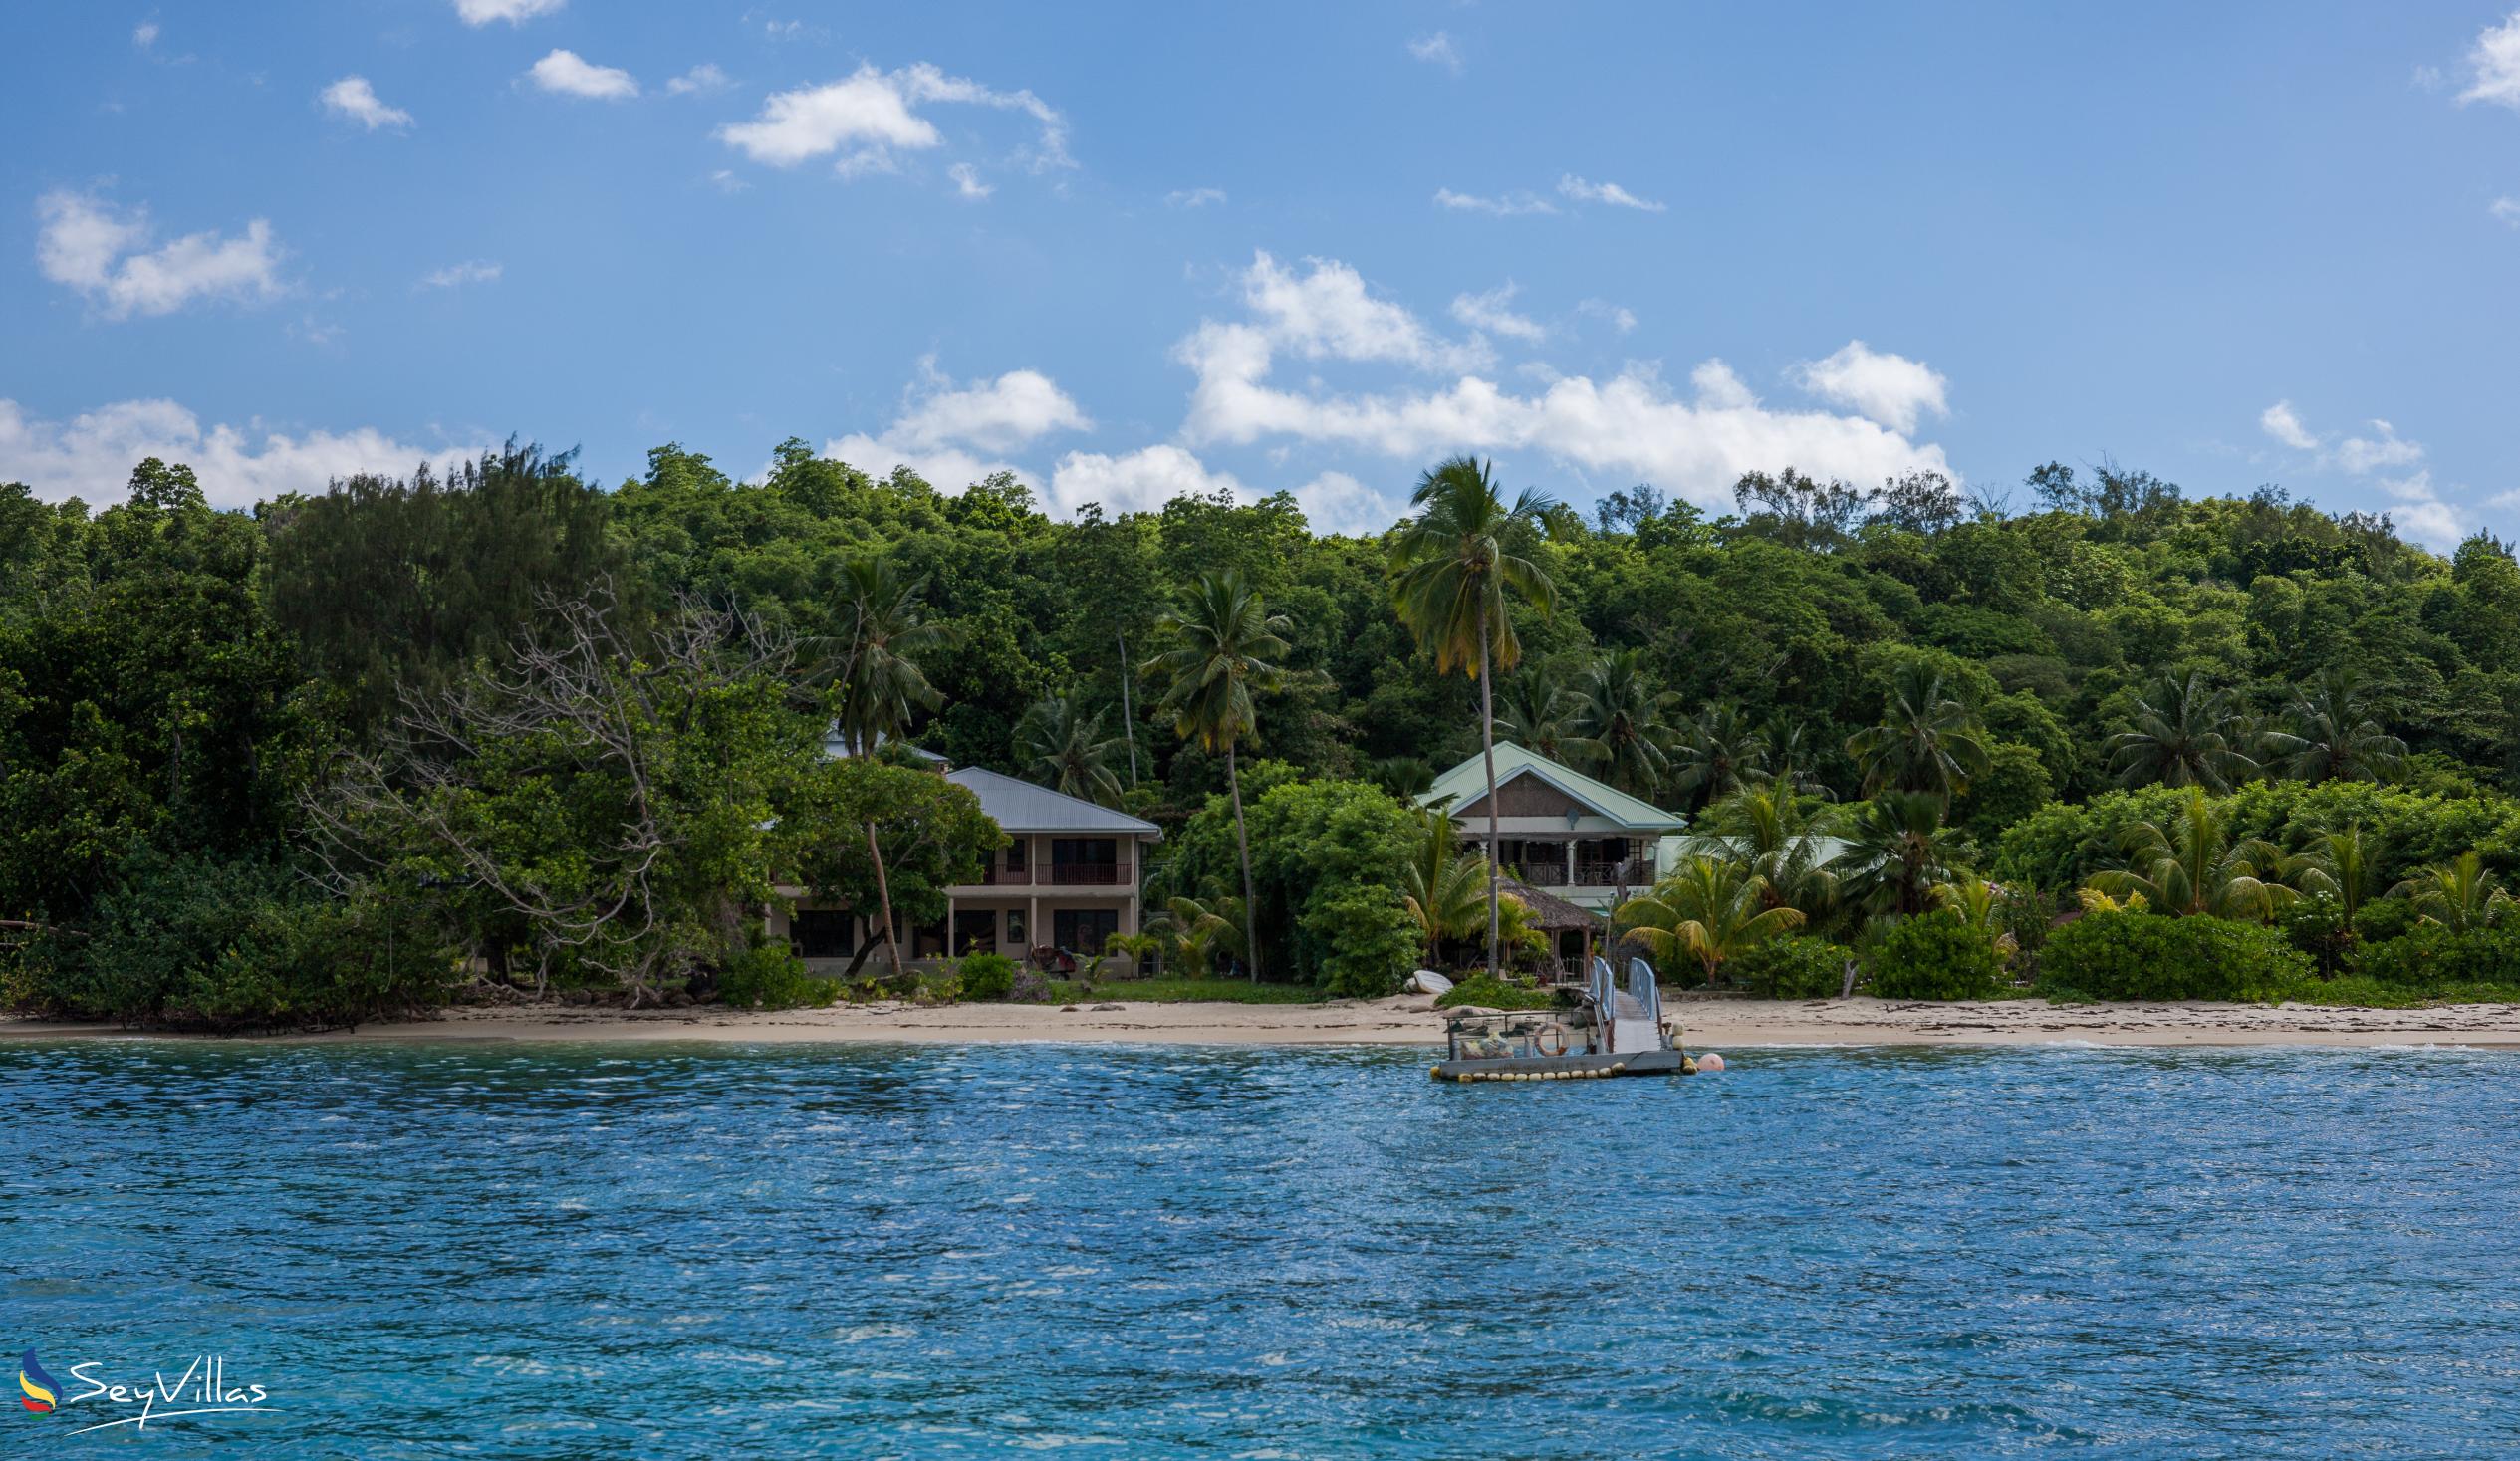 Foto 16: Villa de Cerf - Location - Cerf Island (Seychelles)